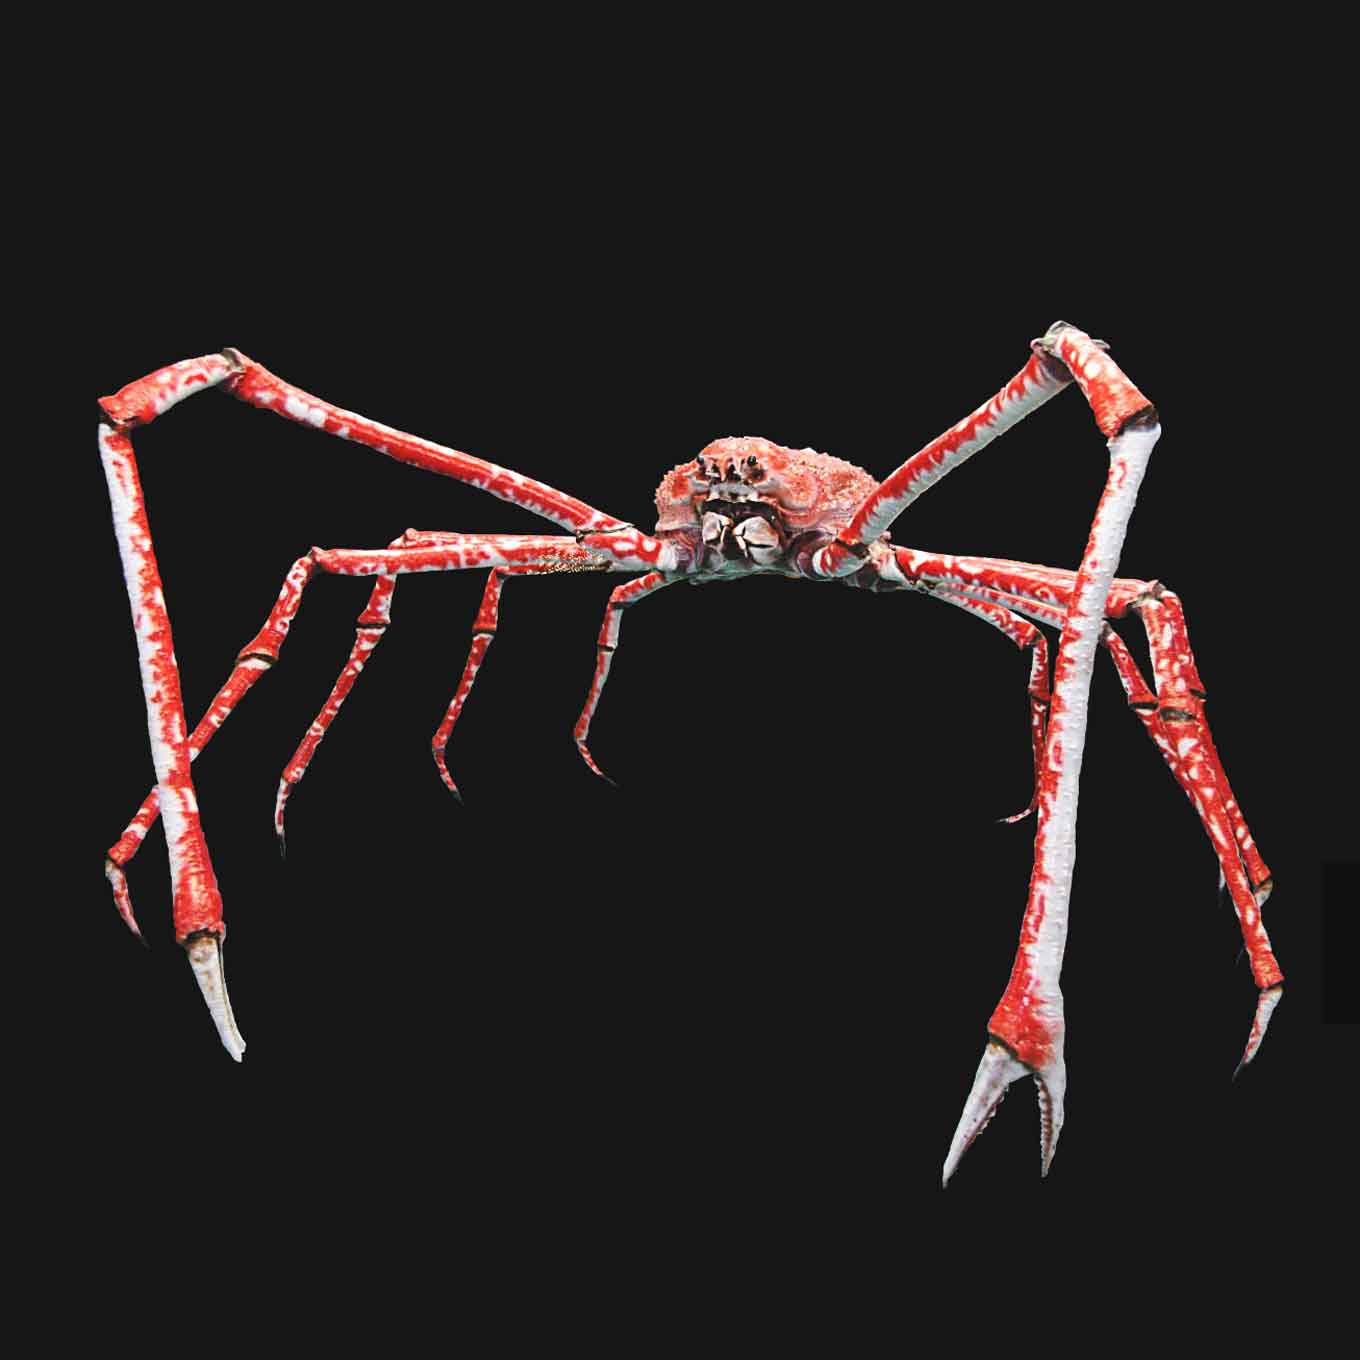 Japanese Spider Crab on Black Background